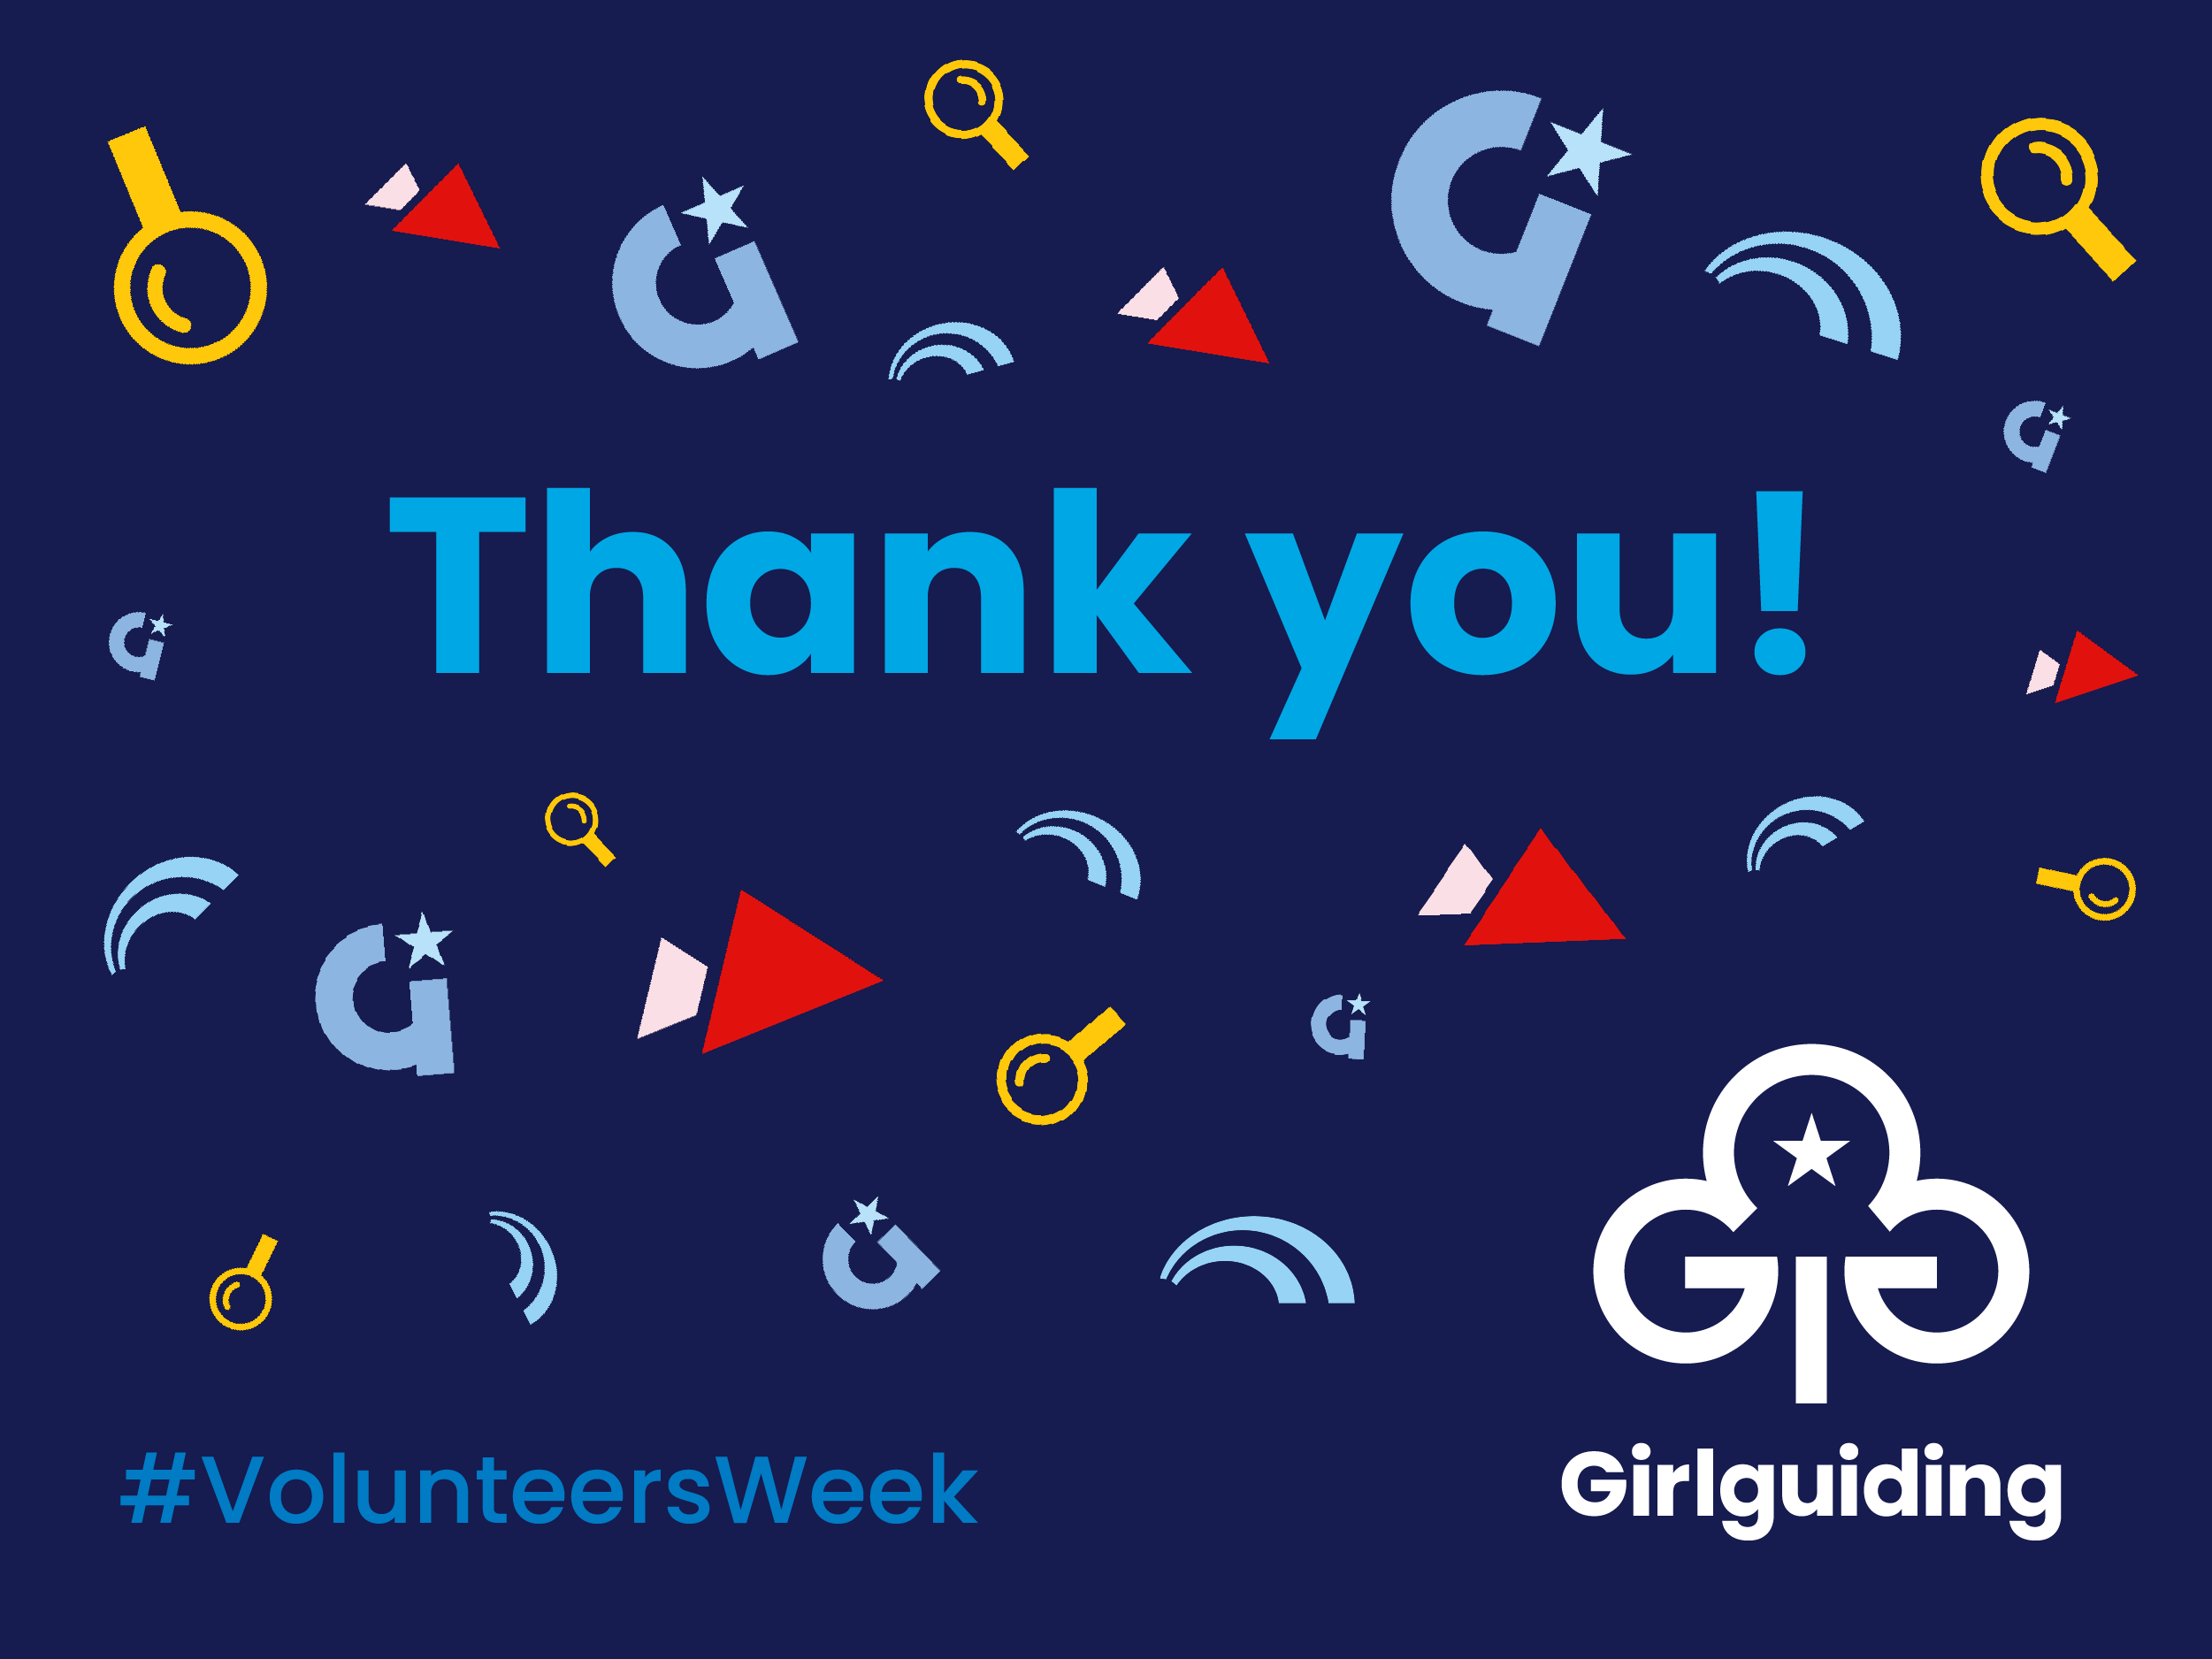 Girlguiding - Volunteers Week, Thank you!